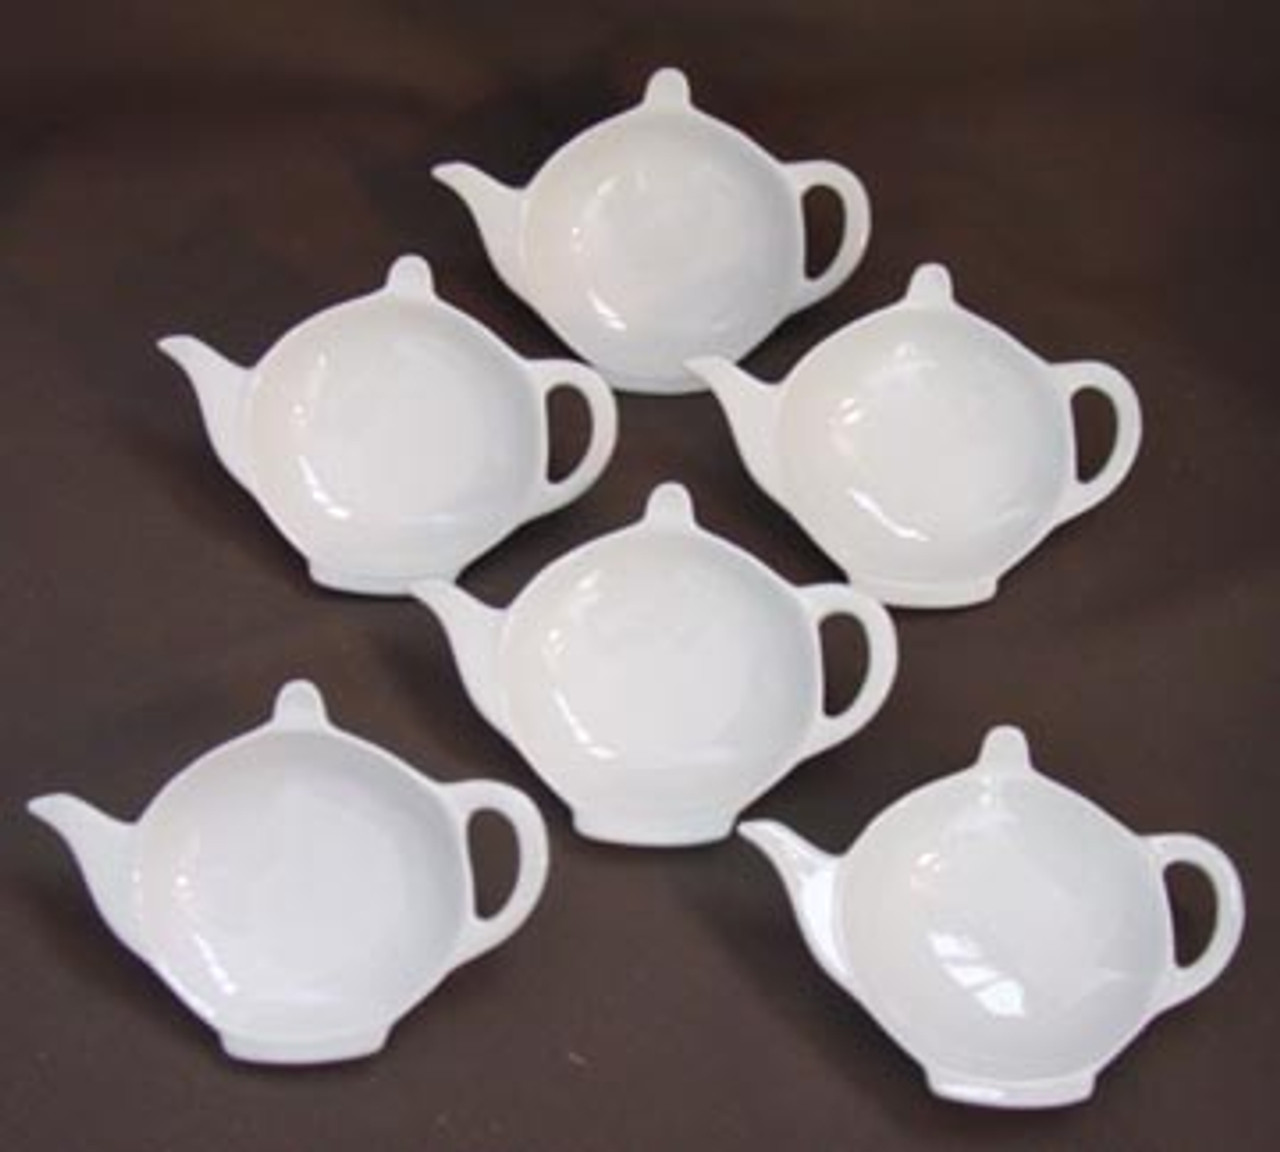 https://cdn11.bigcommerce.com/s-e0xlh4avpe/images/stencil/1280x1280/products/116720/155486/white-porcelain-teapot-shaped-tea-bag-holder-caddy-set-of-6-29__34787.1650948967.jpg?c=1